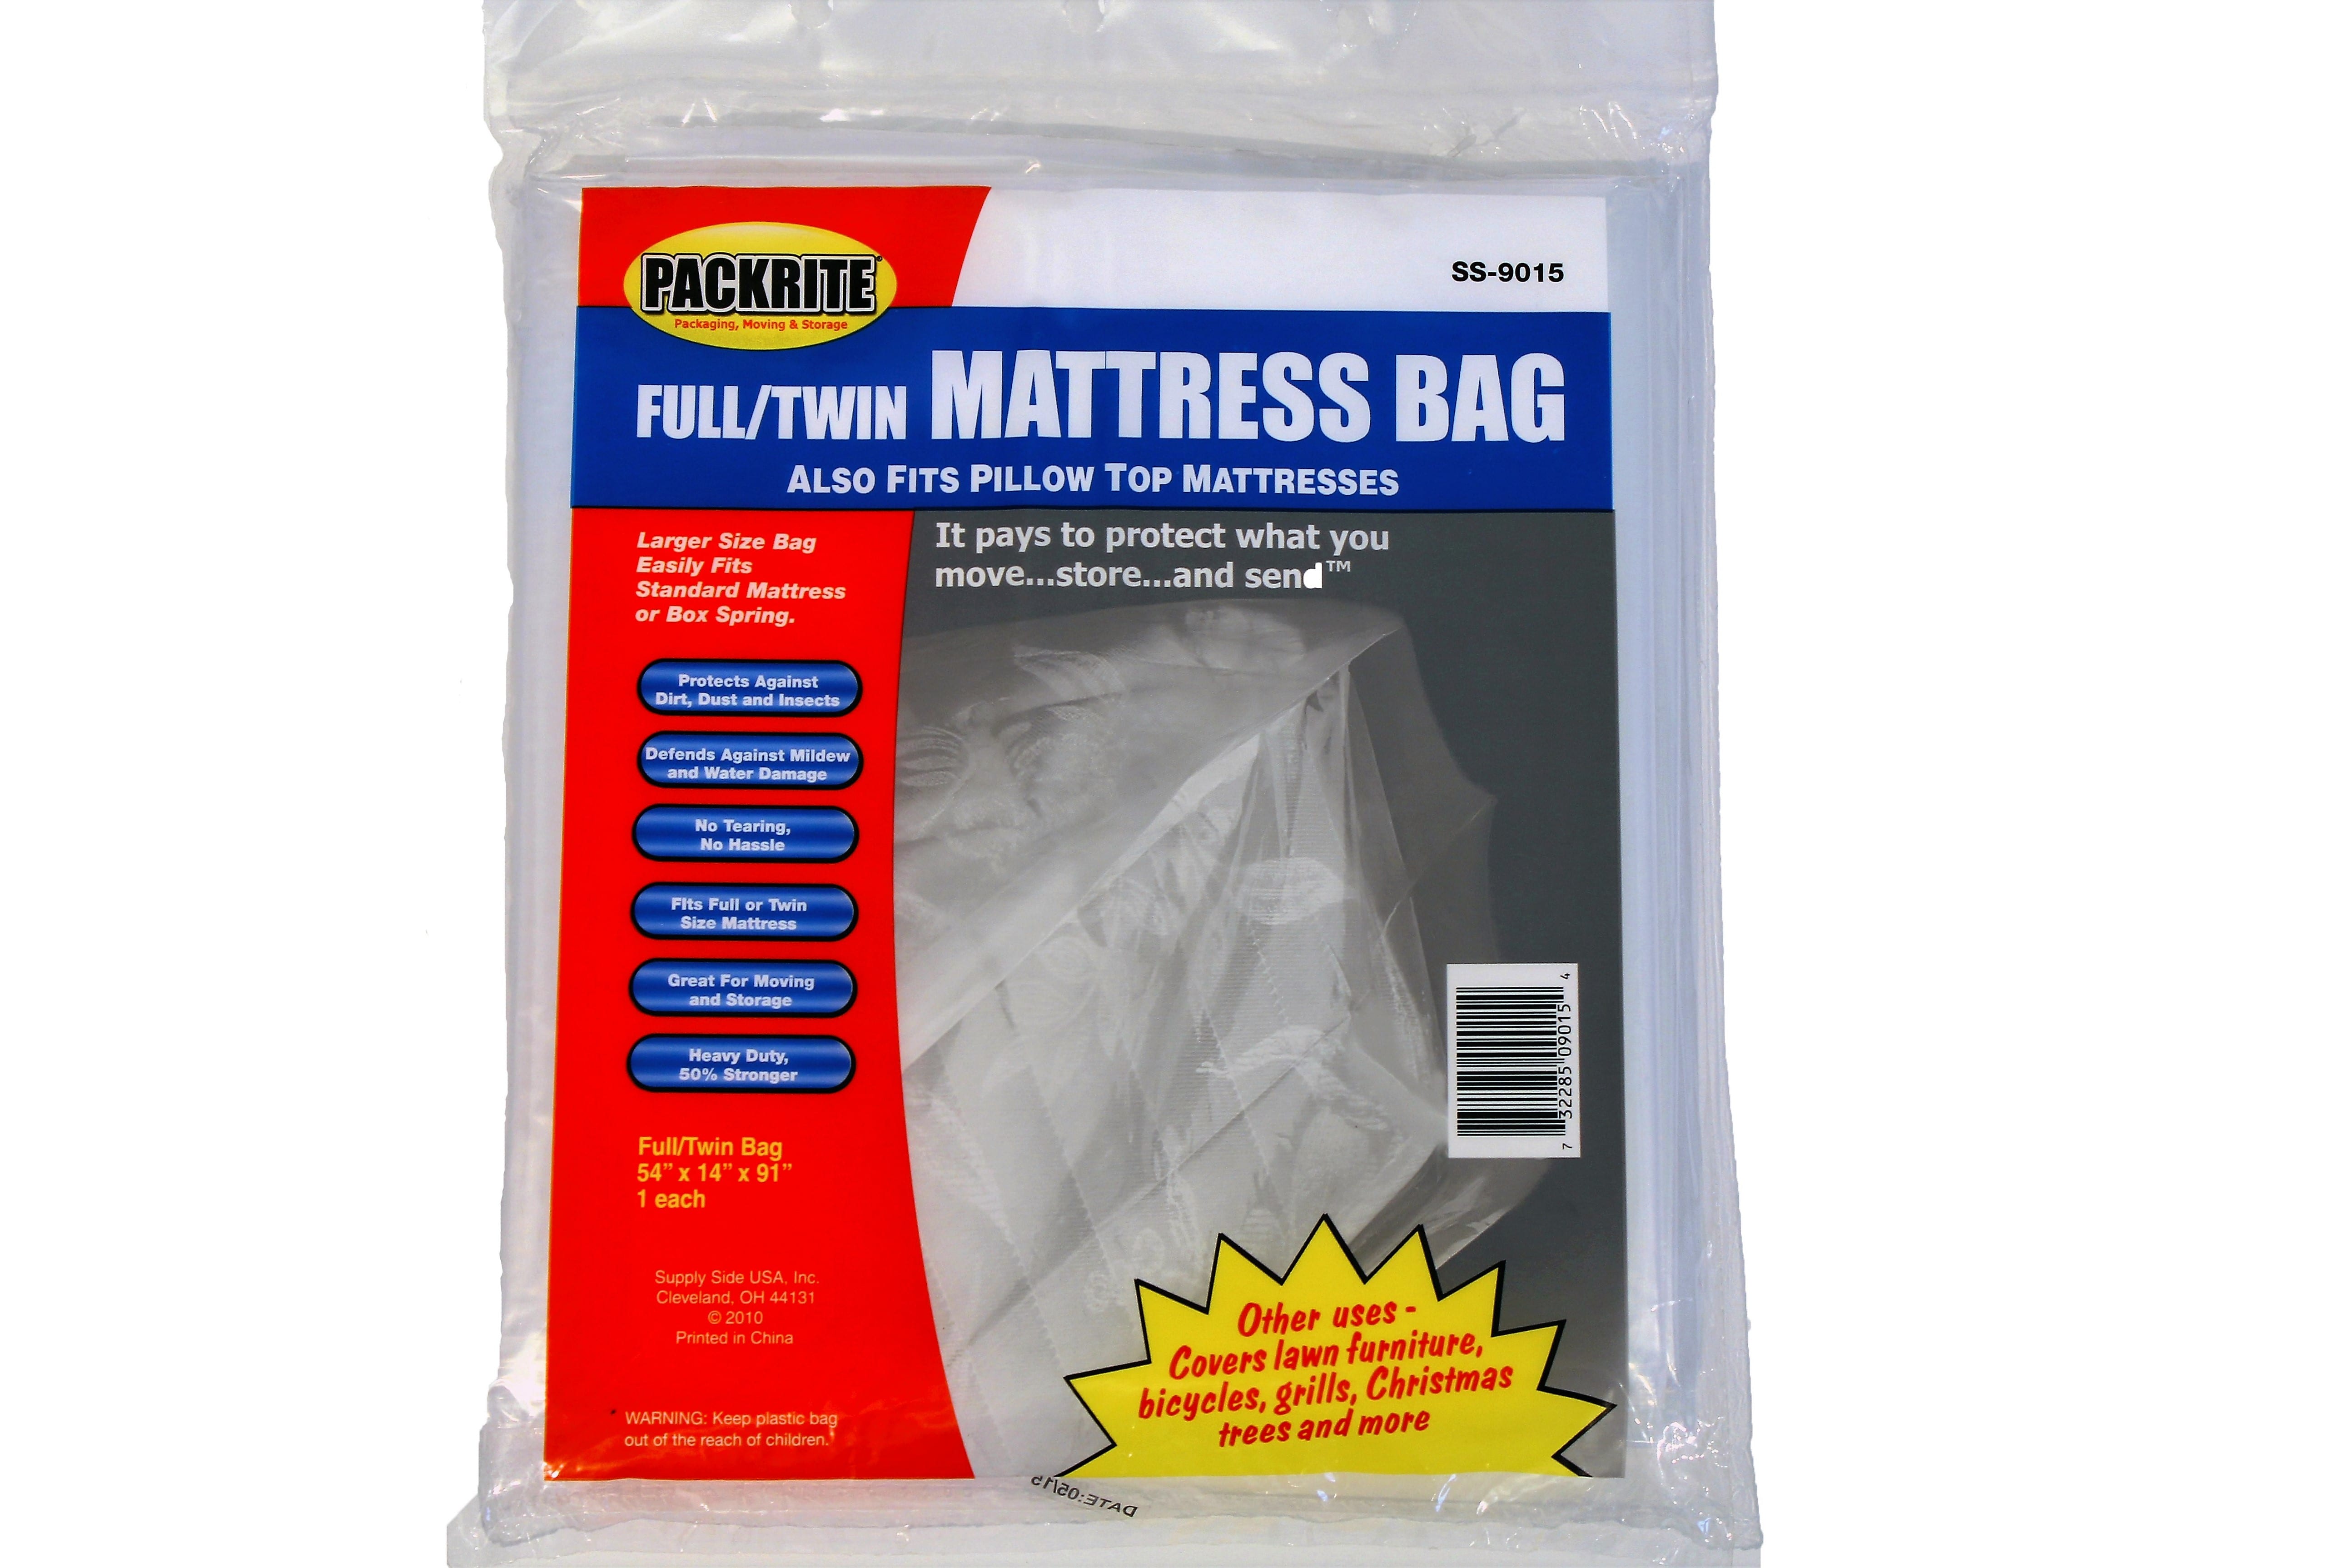 mattress disposal bag full